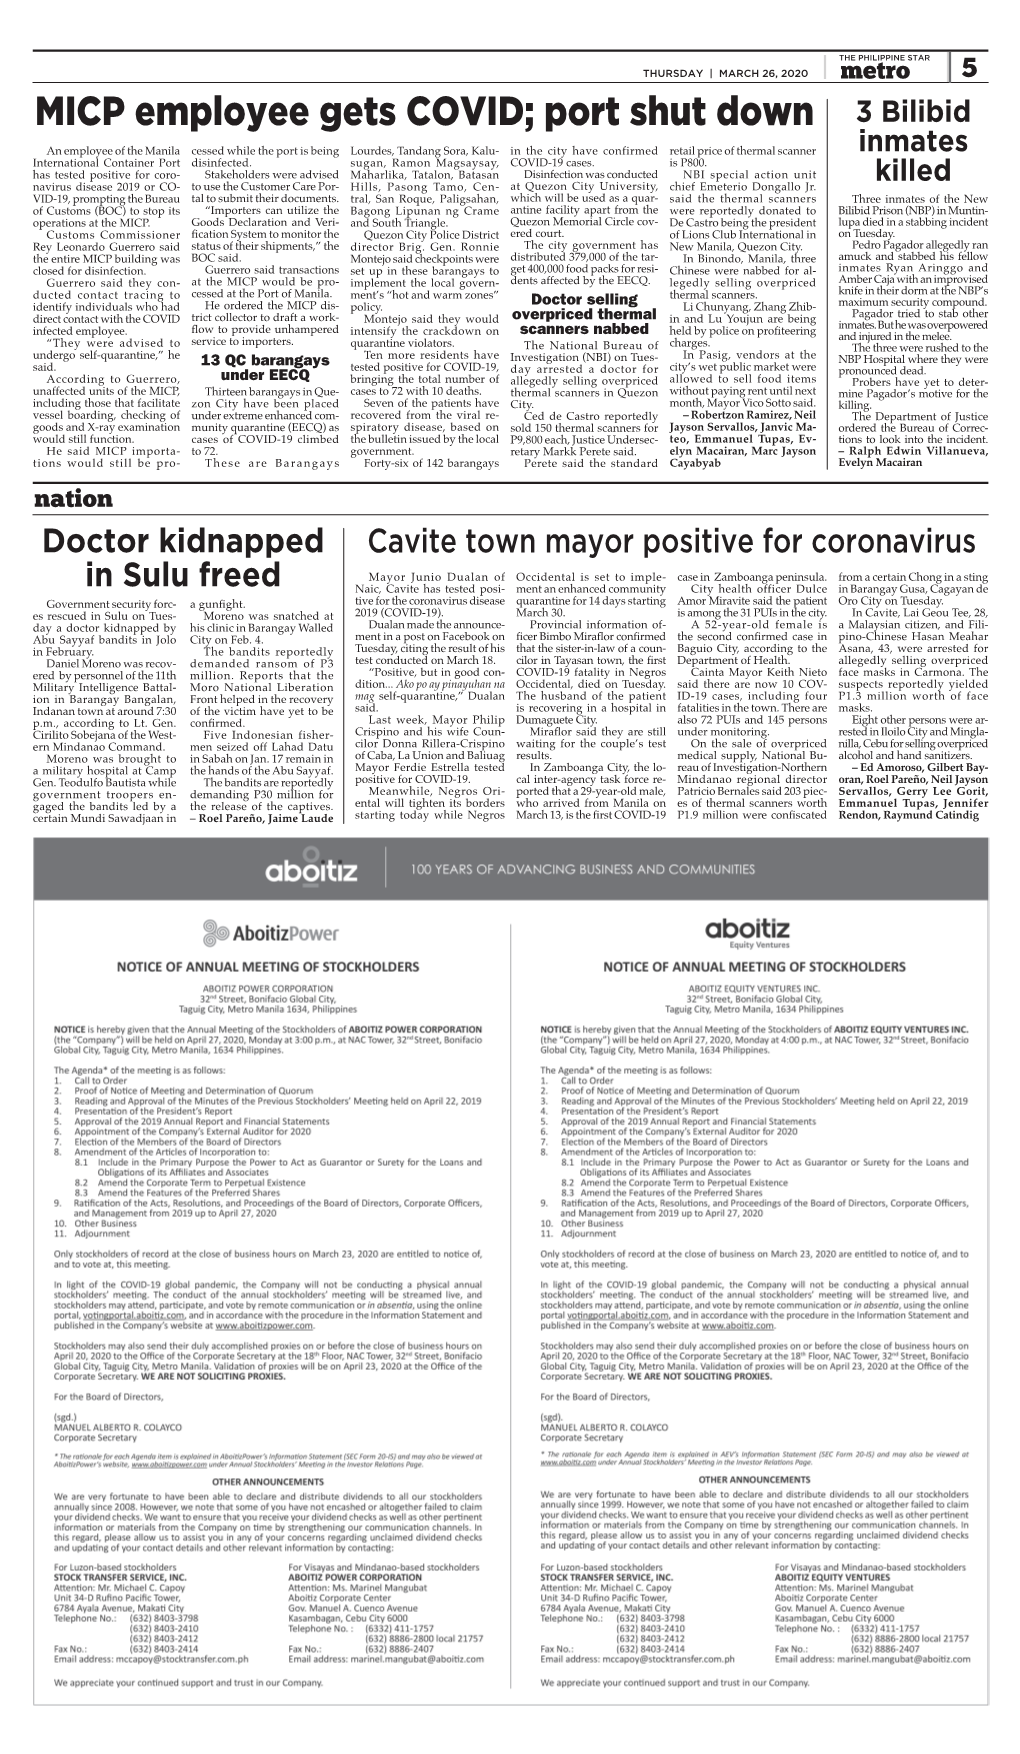 Philippine STAR THURSDAY | MARCH 26, 2020 Metro 5 MICP Employee Gets COVID; Port Shut Down 3 Bilibid